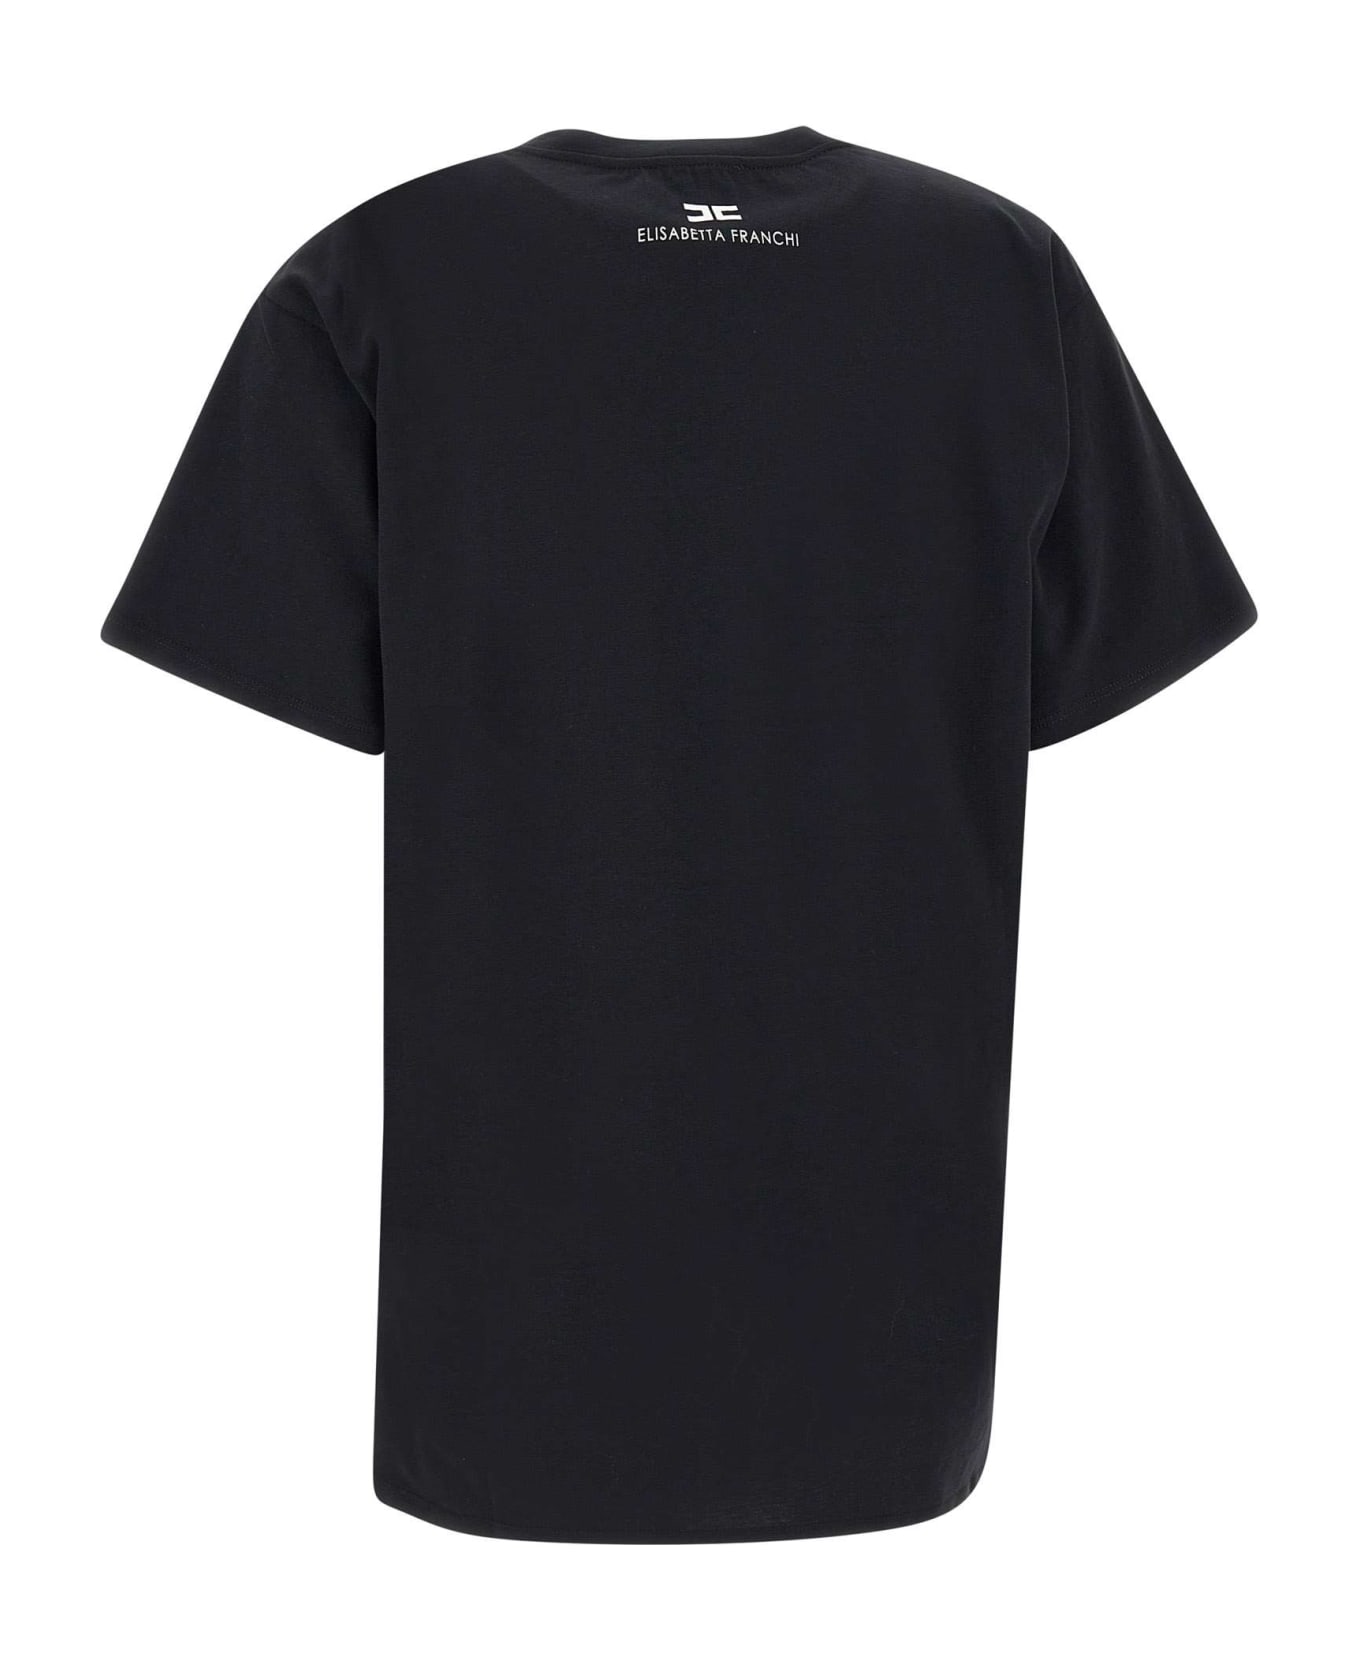 Elisabetta Franchi 'urban' Cotton T-shirt - BLACK Tシャツ